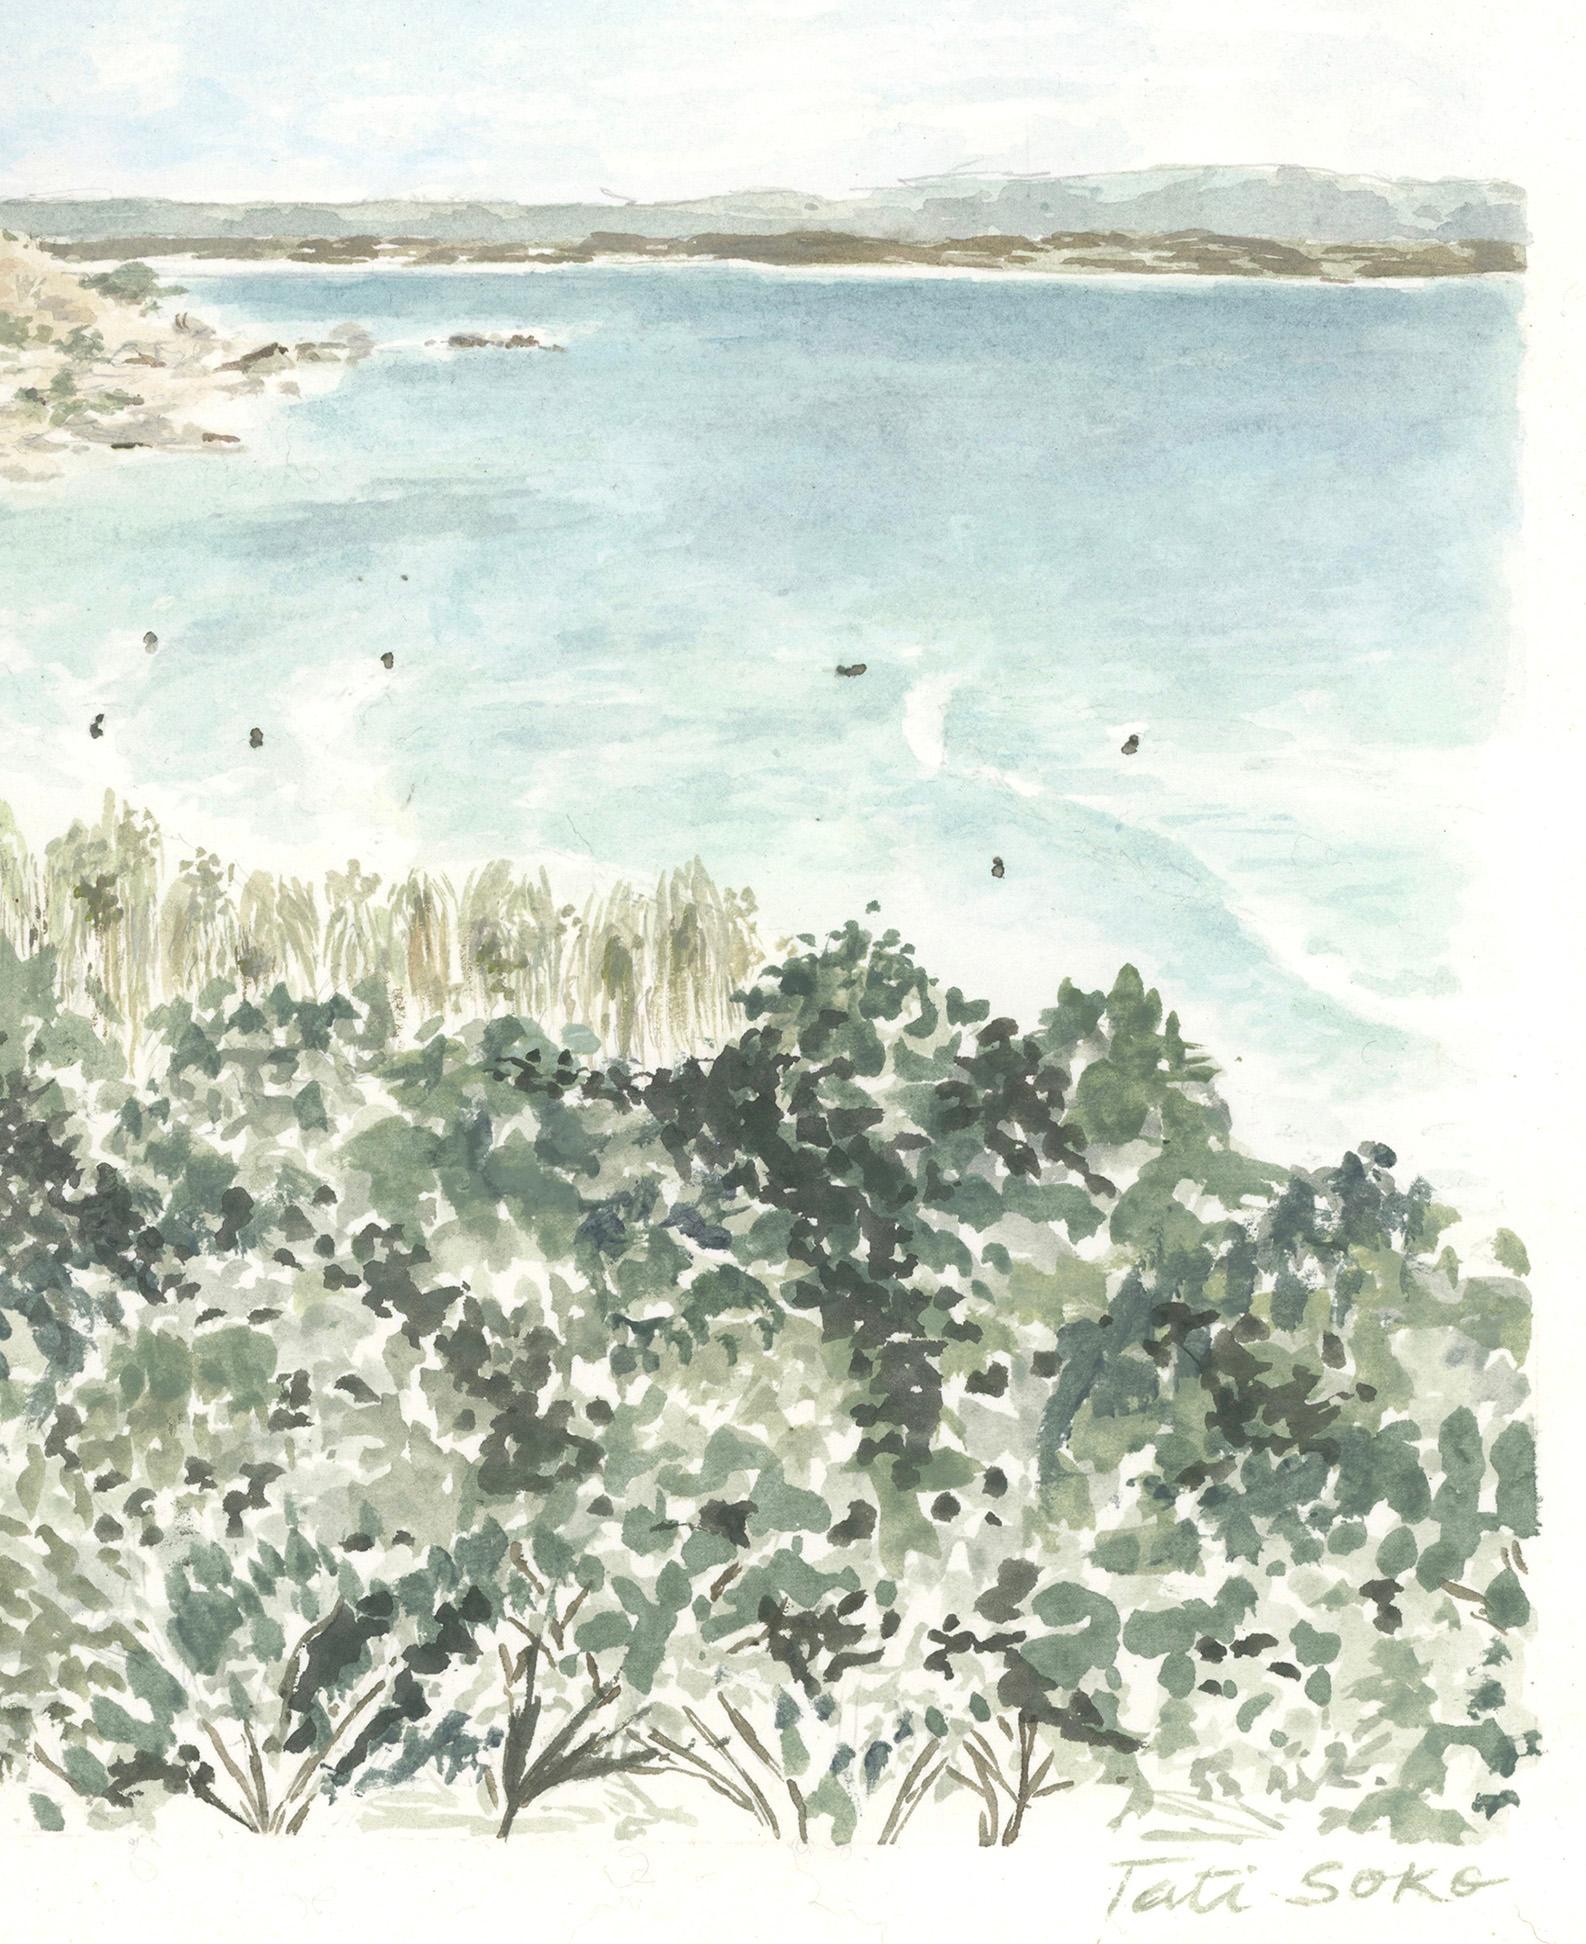 Bay – Einzigartiges Landschafts-Aquarellgemälde, 2022 (Grau), Still-Life Painting, von Tati Soko